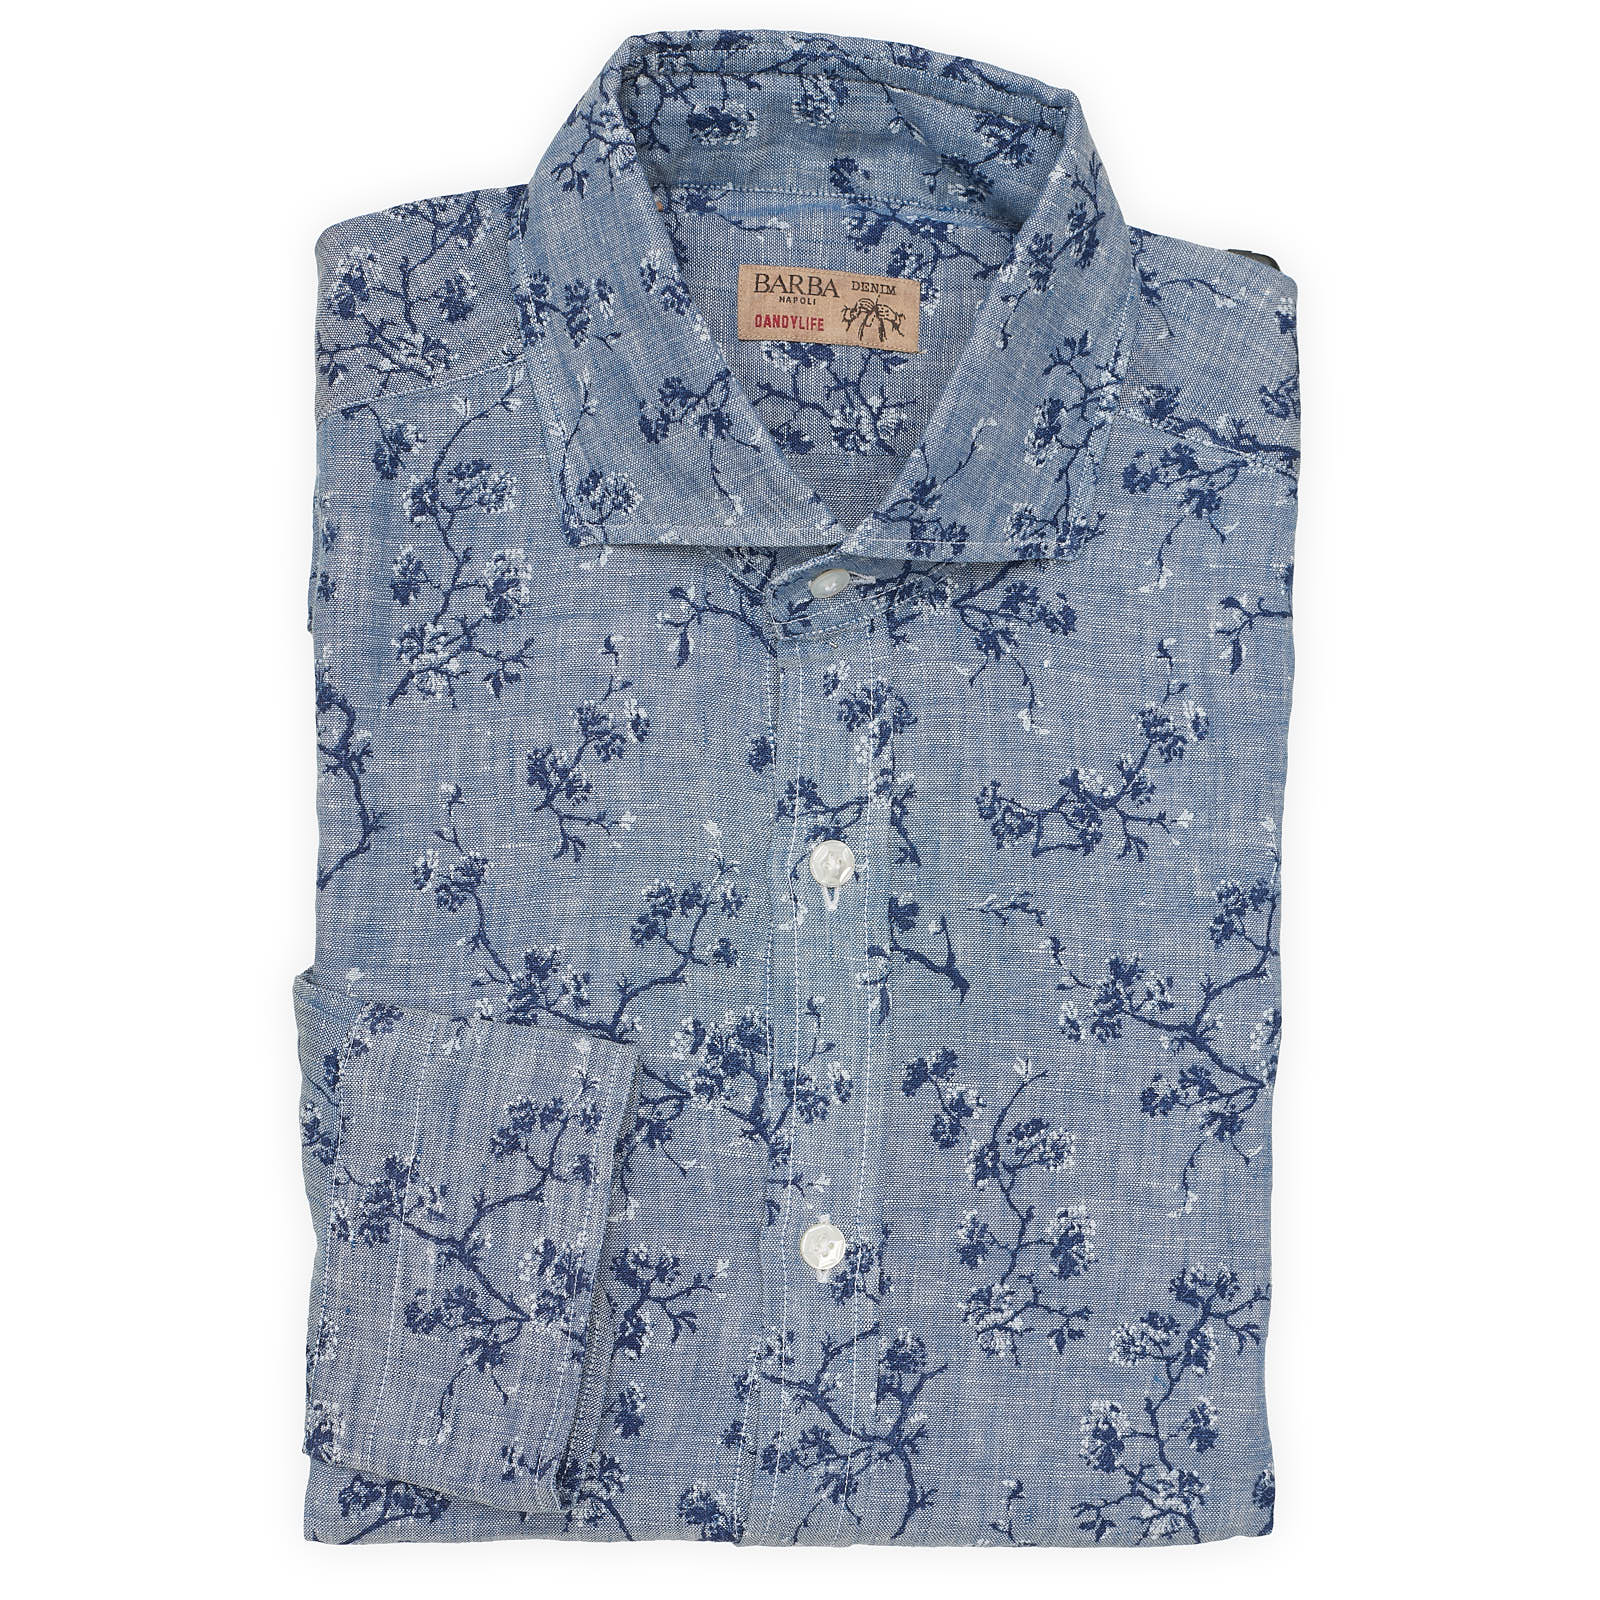 BARBA Dandylife Denim Blue Floral Linen Shirt EU 40 NEW US 15.75